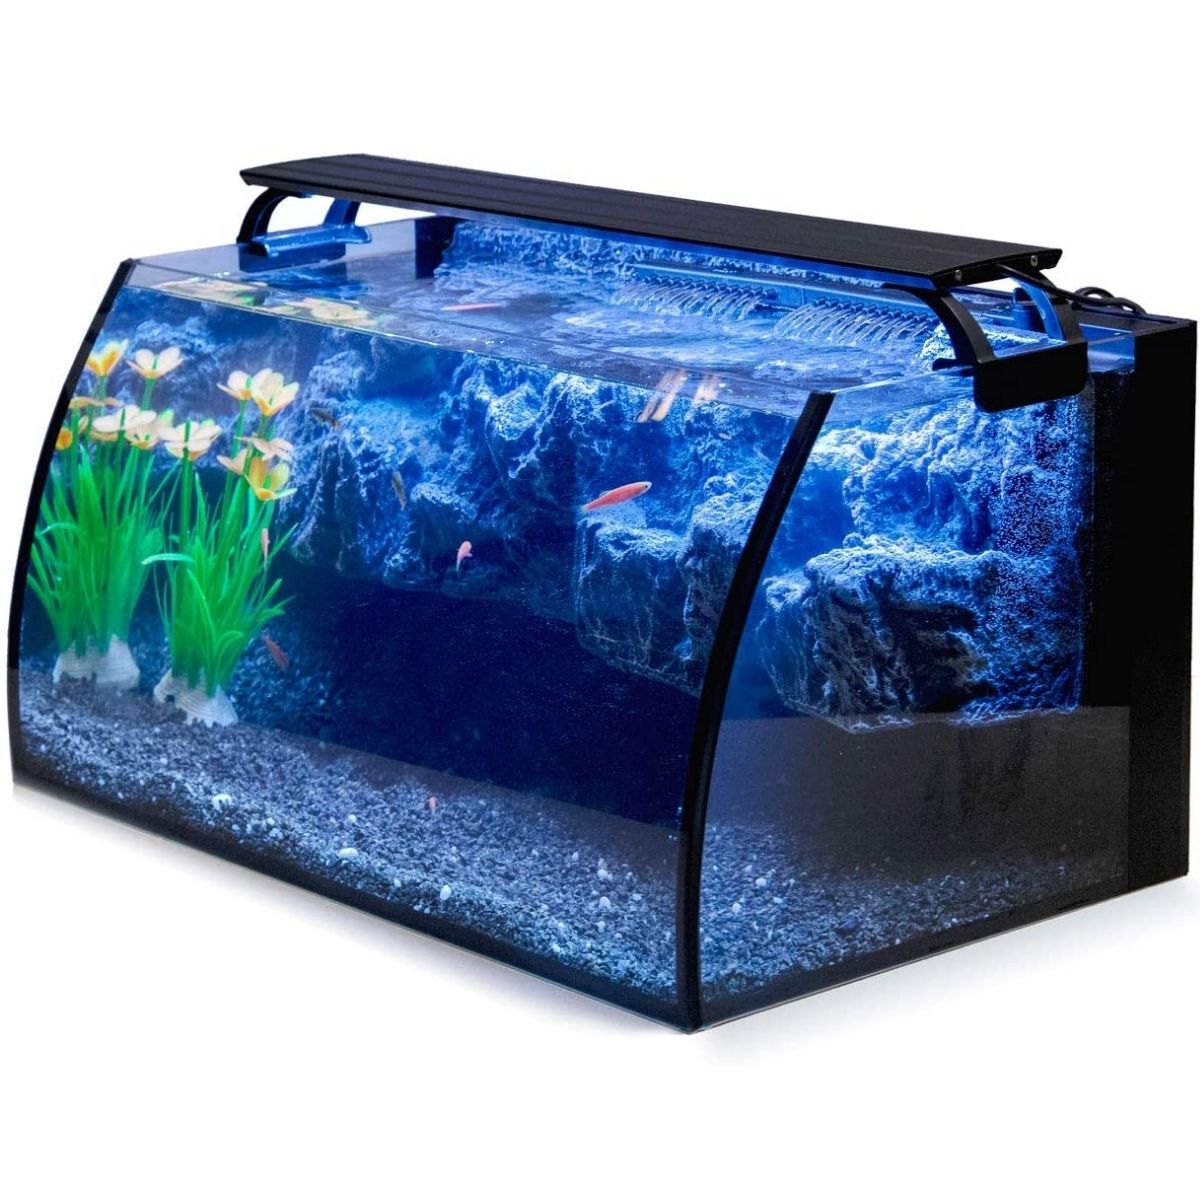 The Best Bow Front Aquarium Hygger Horizon 8 Gallon Aquarium Kit